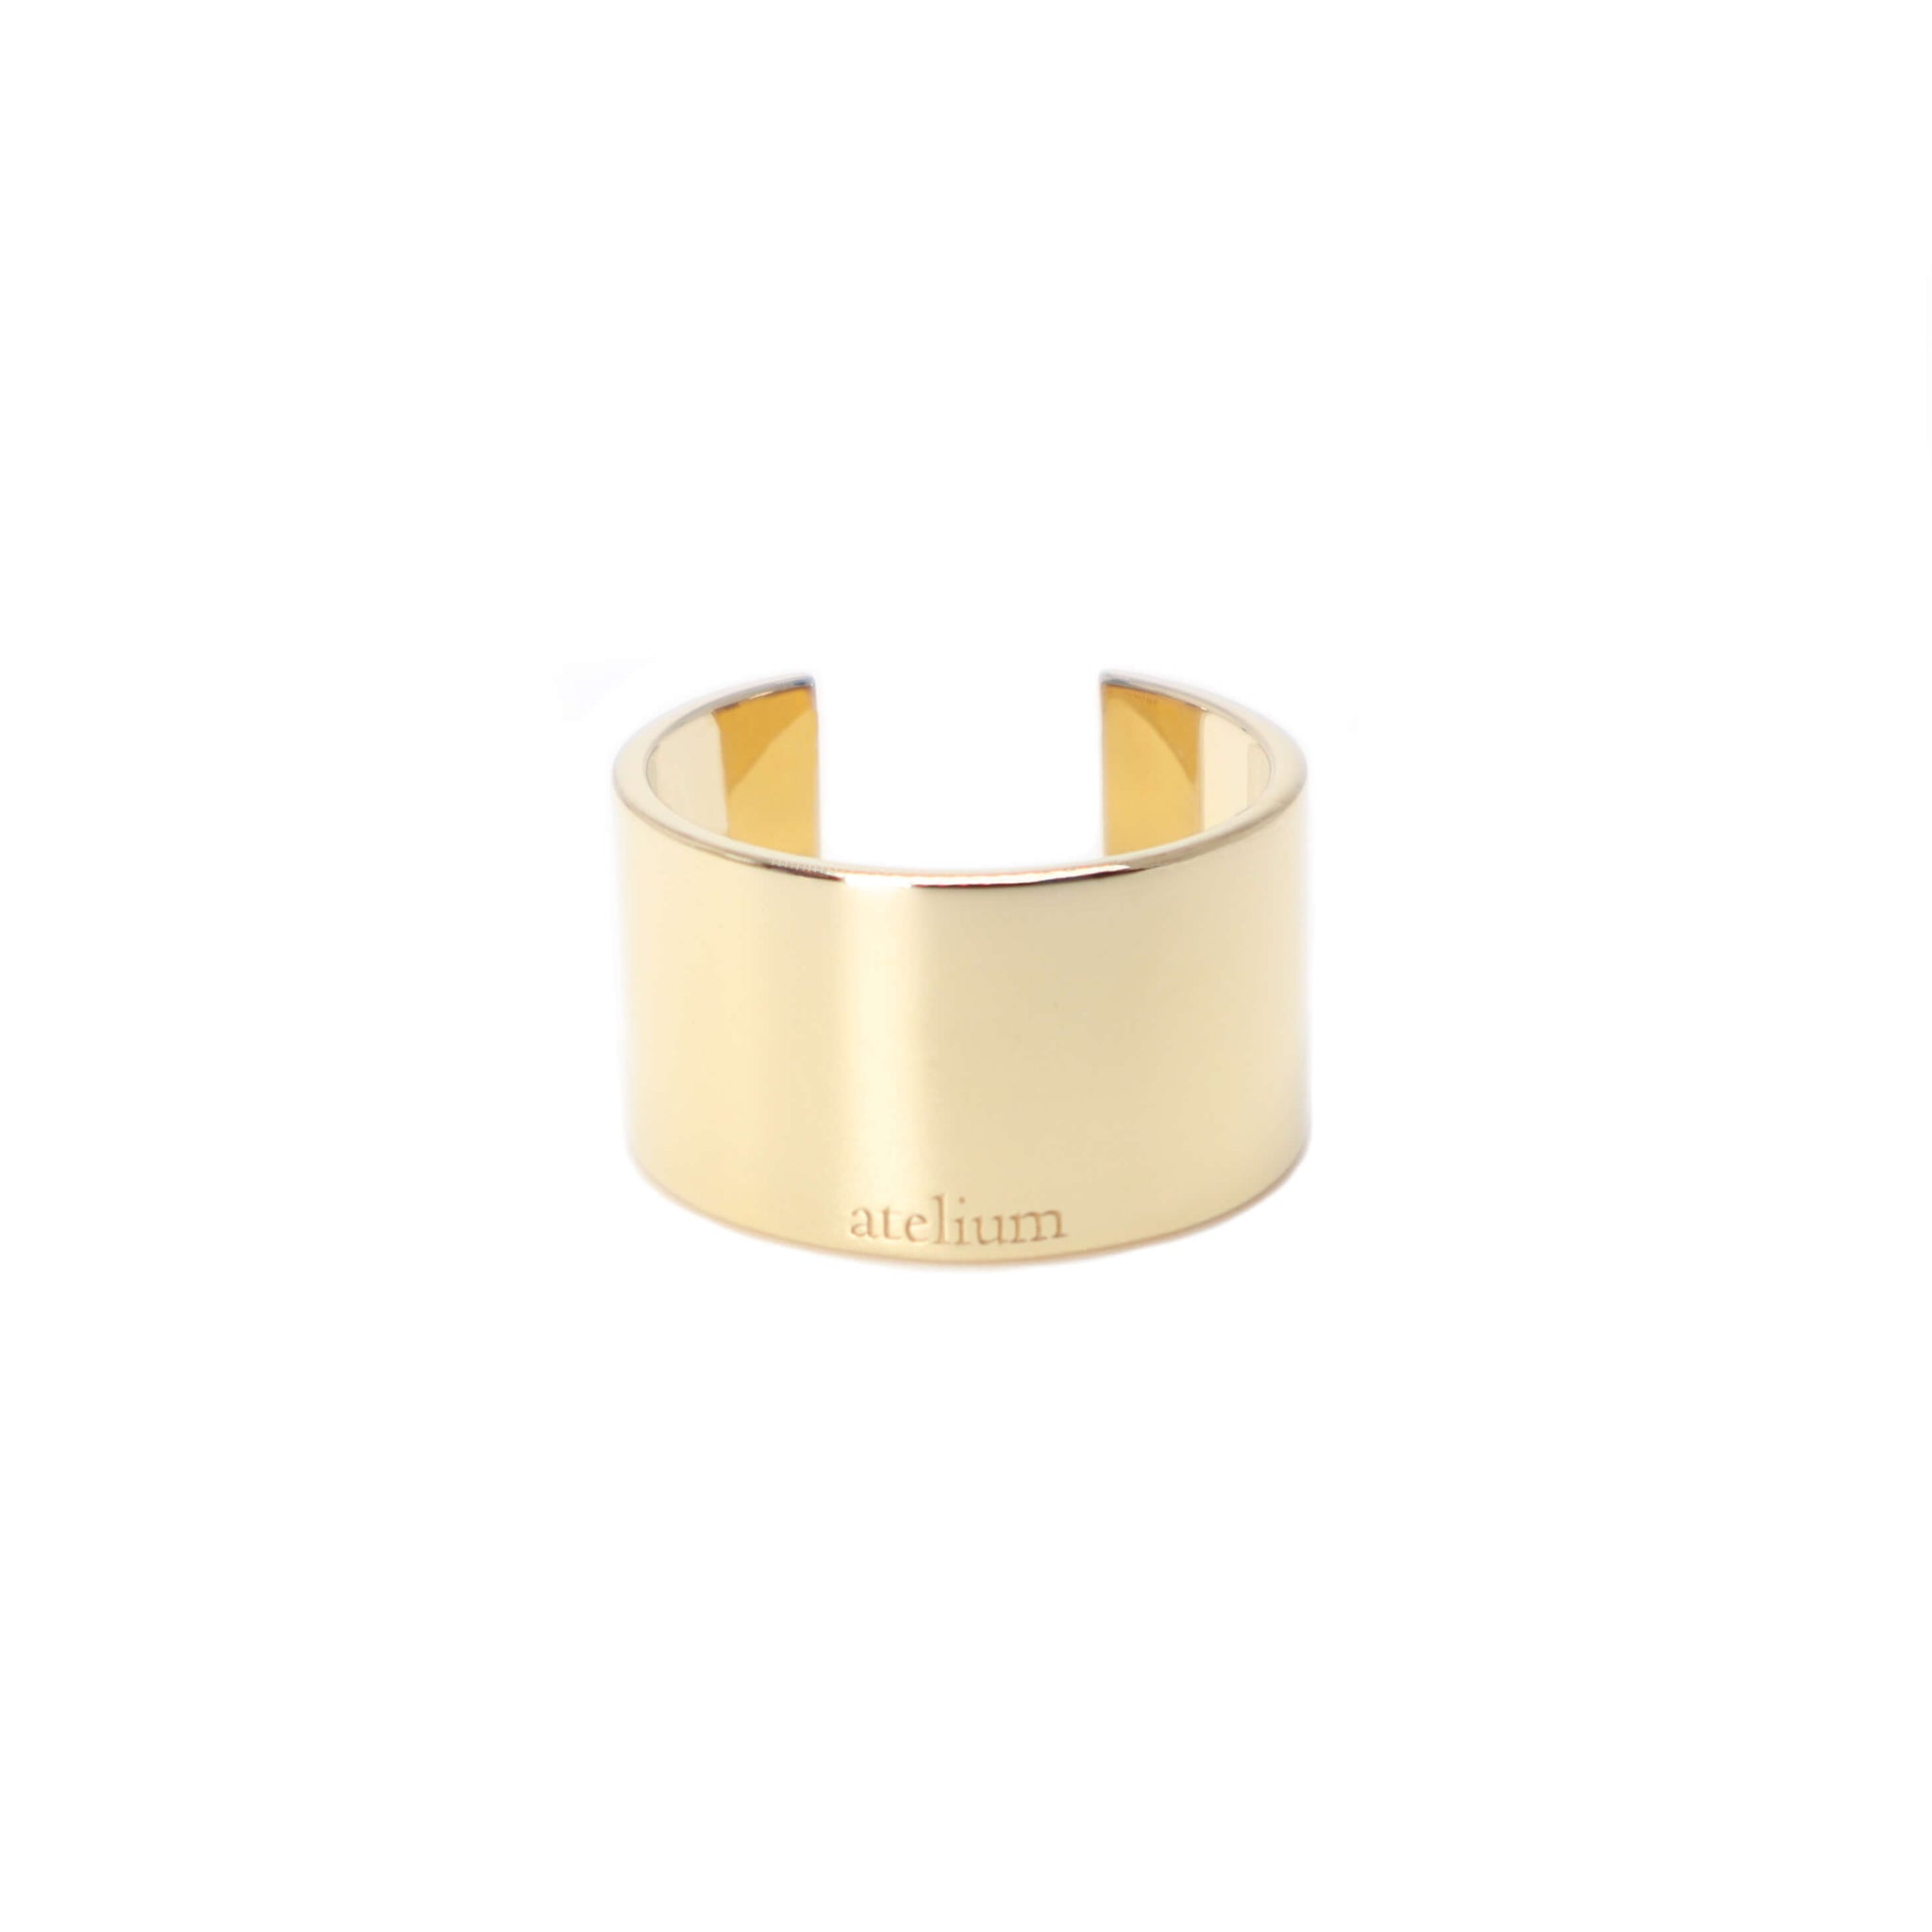 Wide gold cuff ring